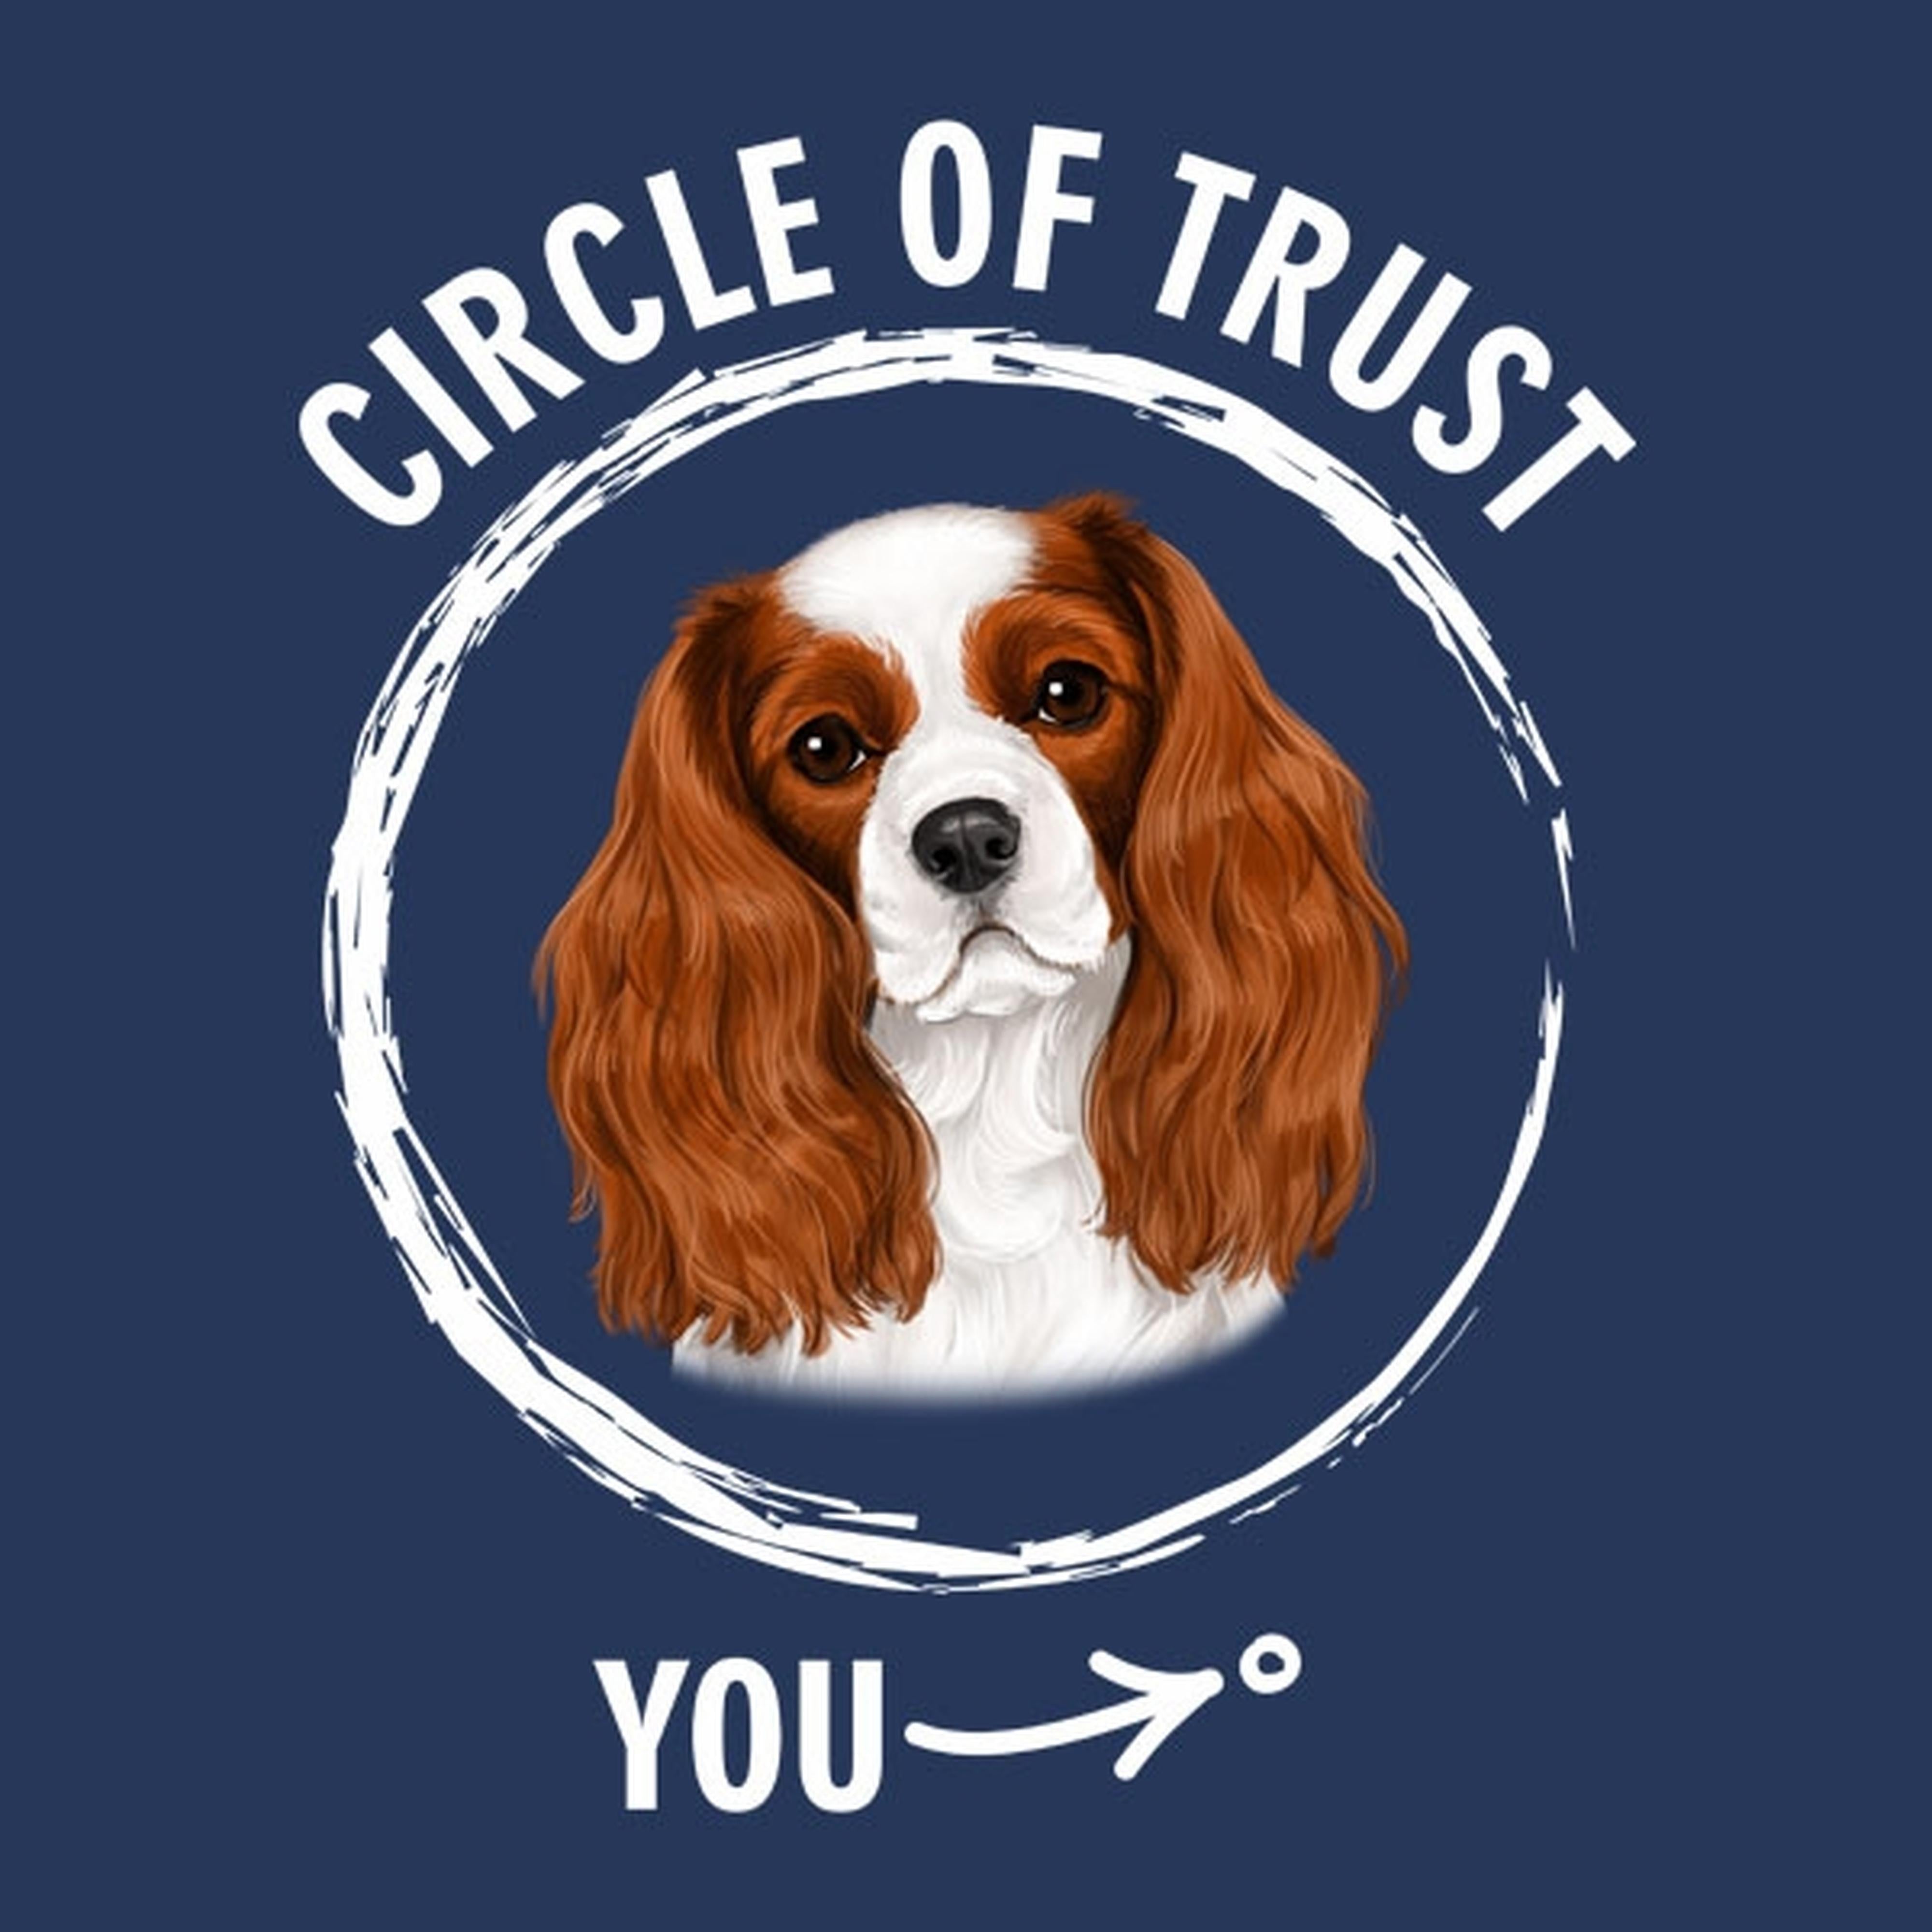 Circle of trust (Cavalier King Charles Spaniel) - T-shirt